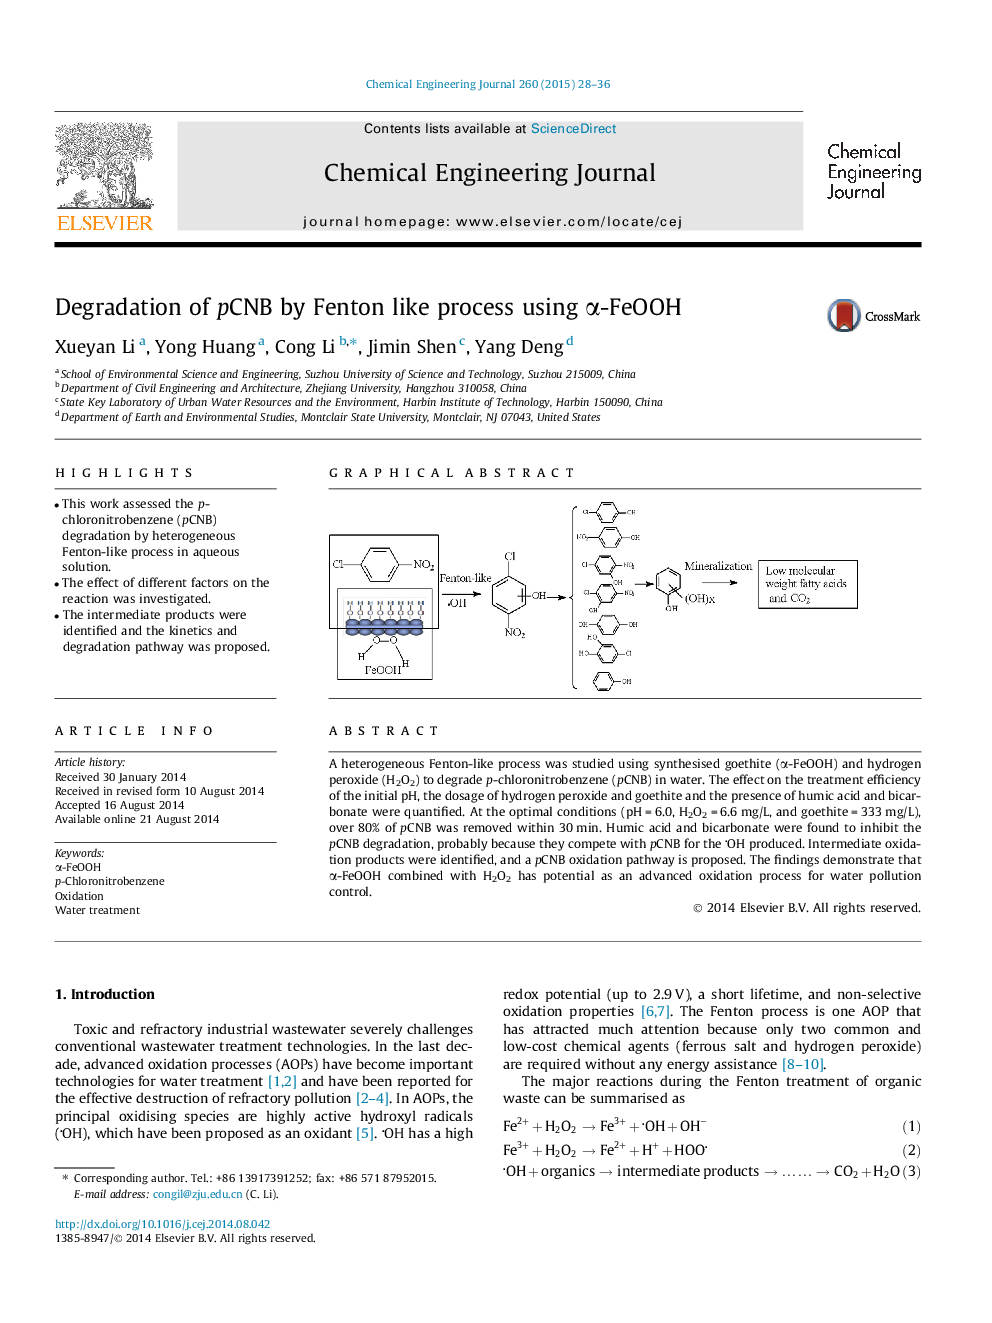 Degradation of pCNB by Fenton like process using α-FeOOH